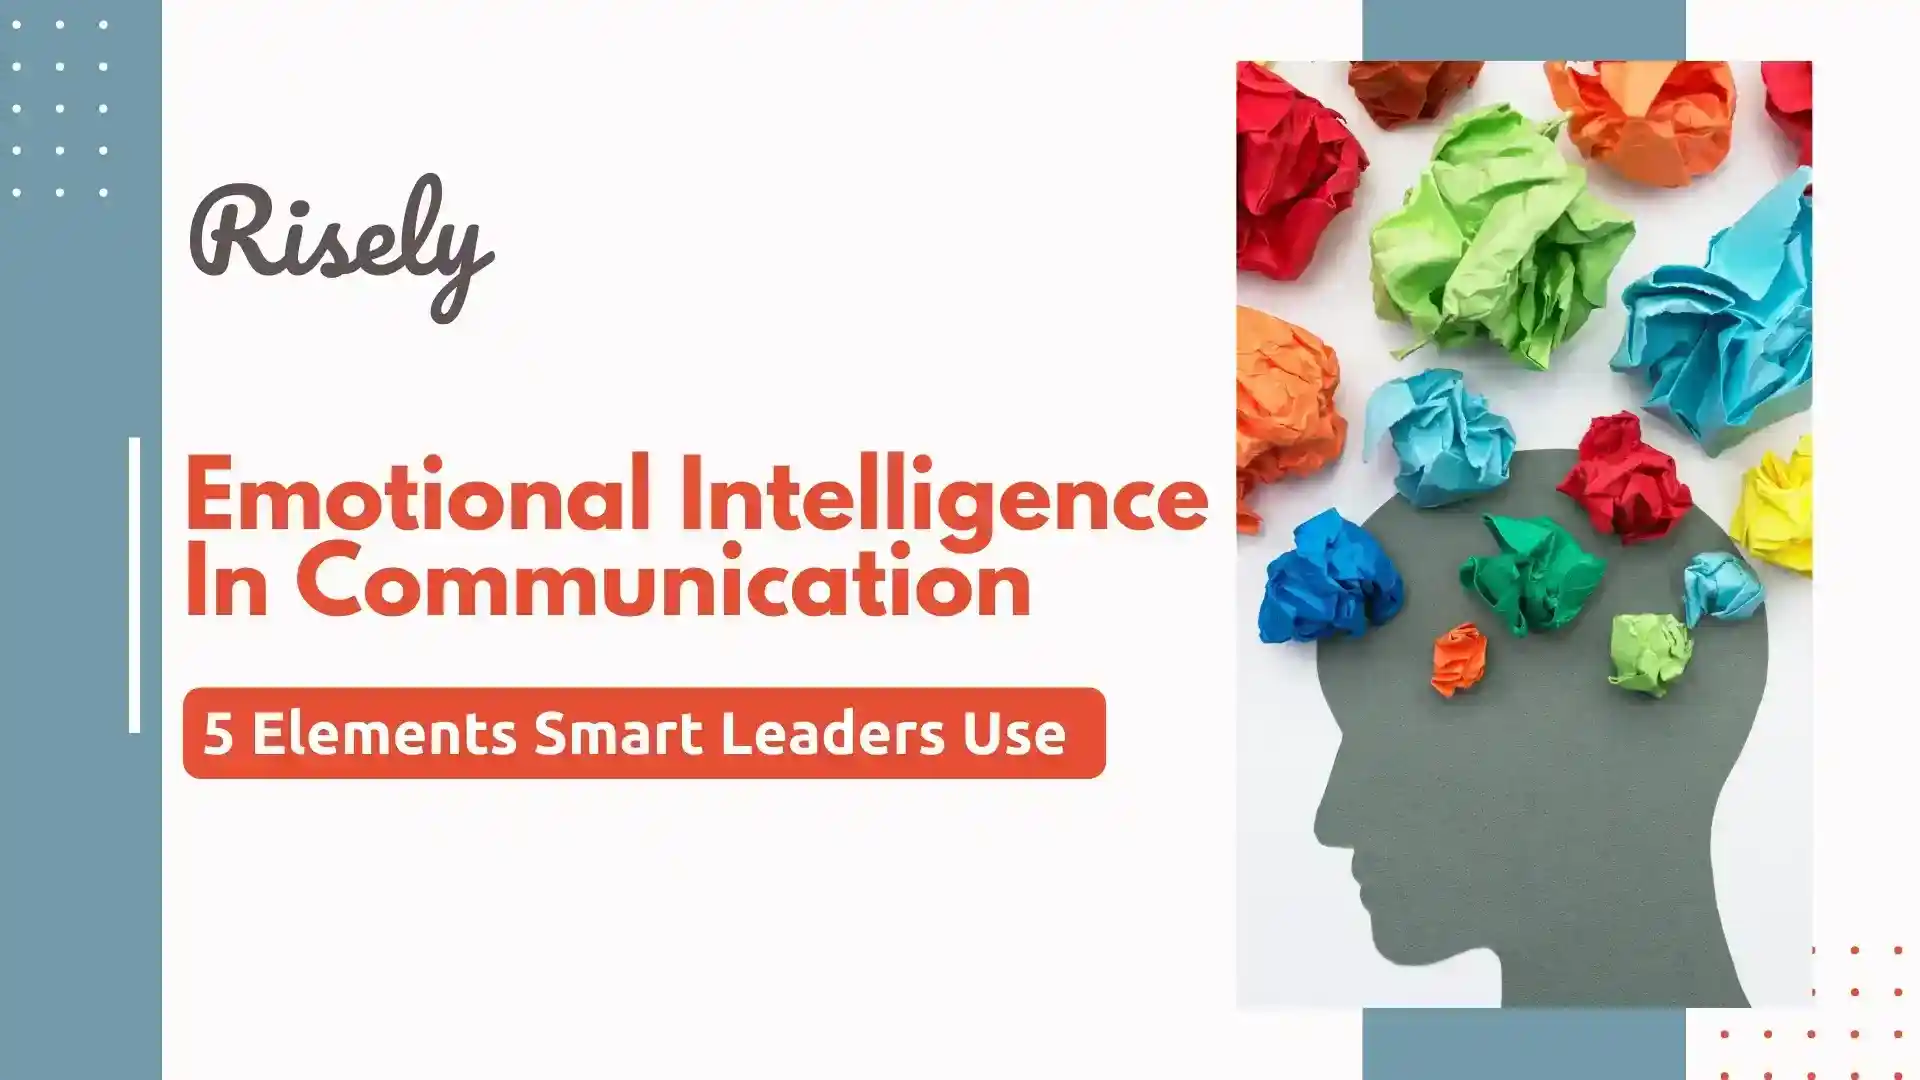 Risely blog on emotional intelligence in communication